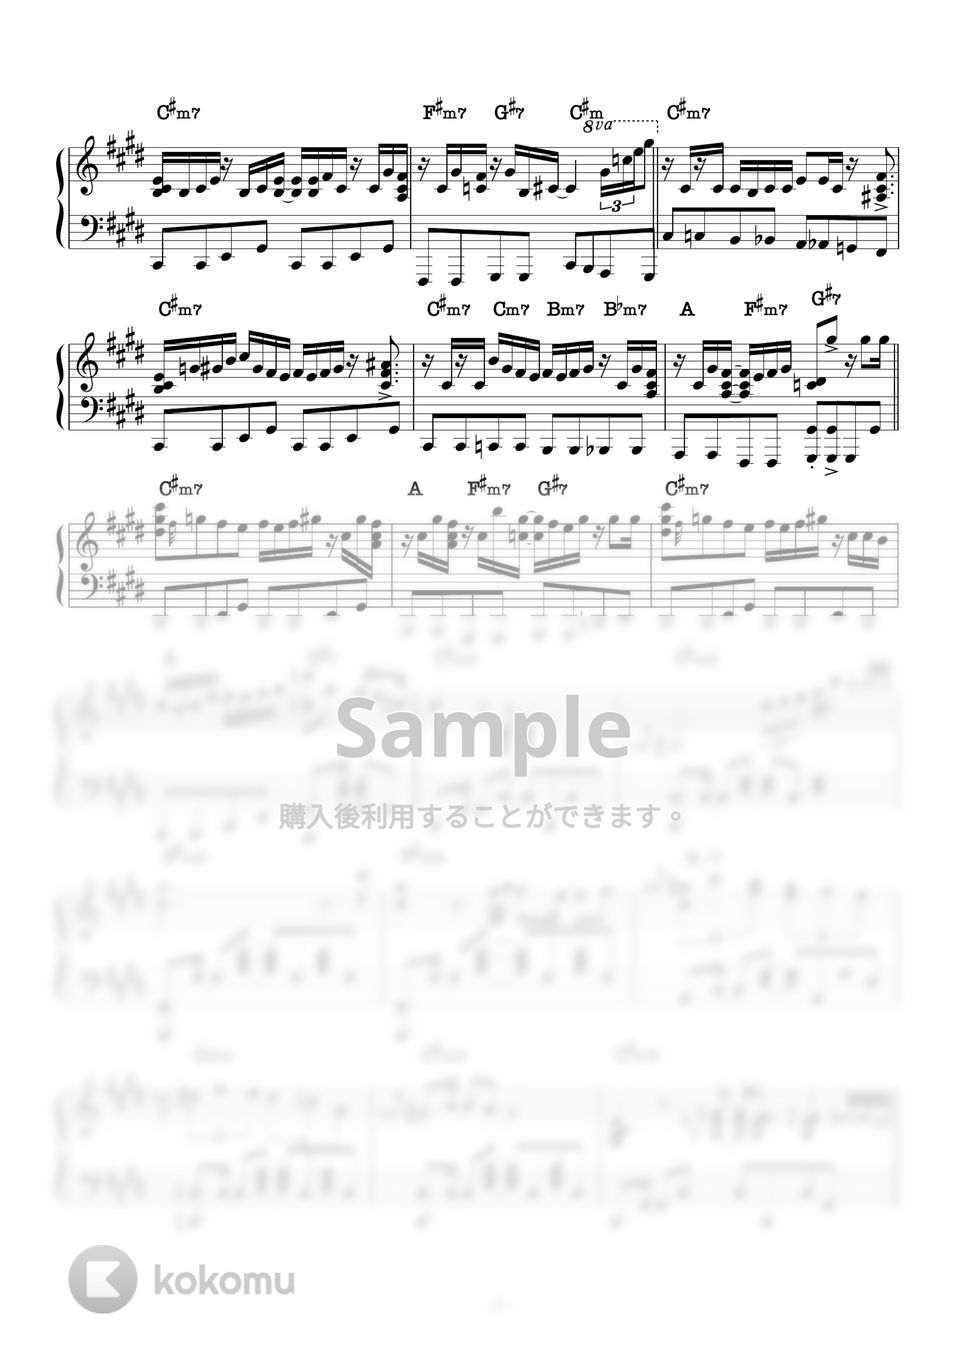 DATEKEN - ワンルーム・オール・ザット・ジャズ(One Room,All That Jazz!) (ピアノソロ/コード有/ボカロ/初音ミク) by CAFUNE-かふね-